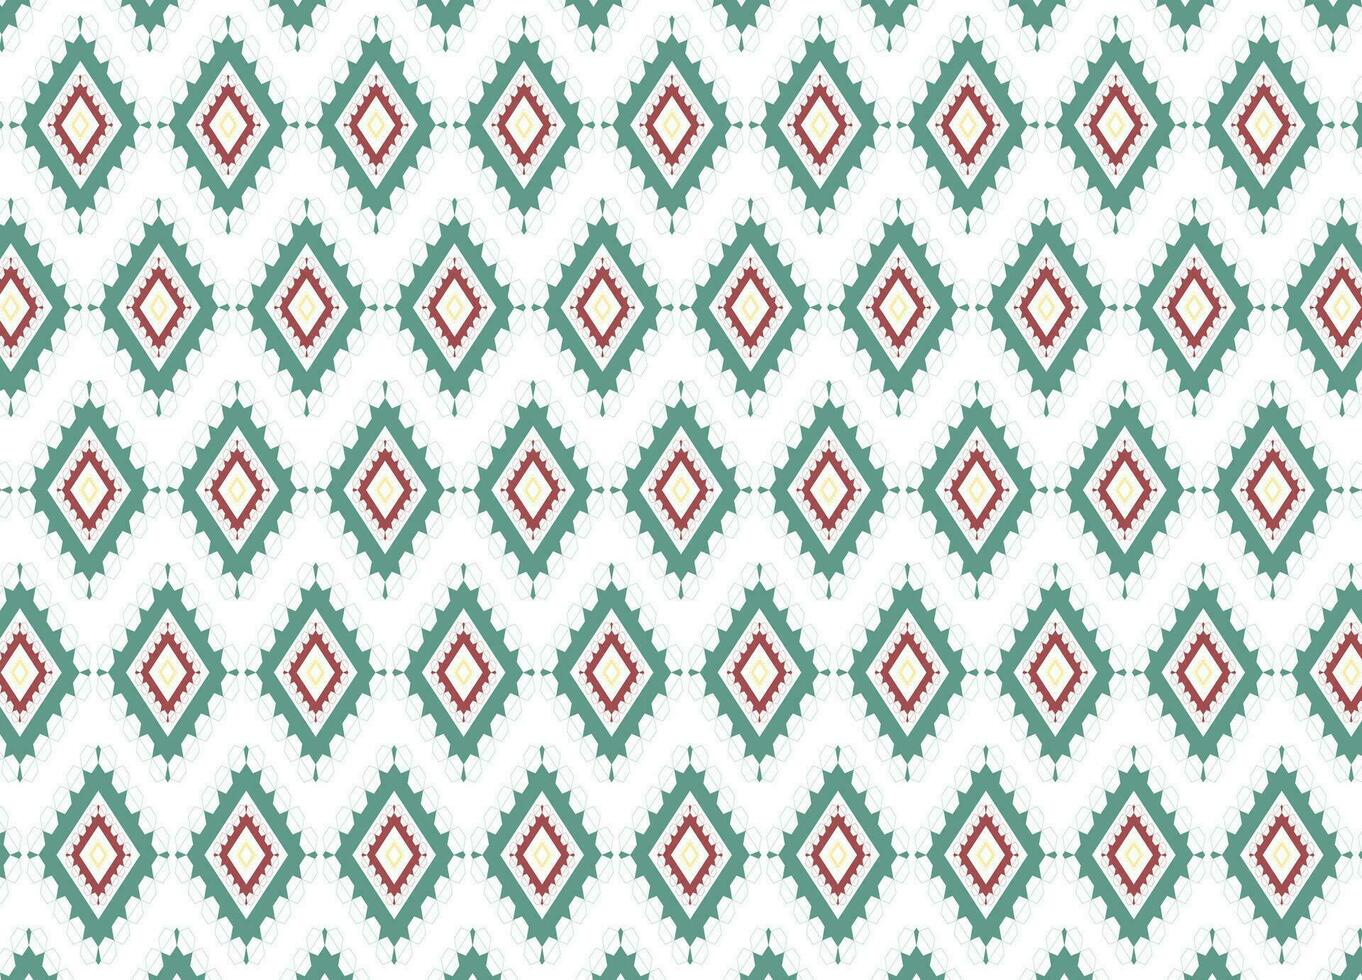 Tribal fabric, traditional fabric ethnic, abstract geometric ikat pattern. Handmade Aztec fabric carpet decoration wallpaper boho native vector background